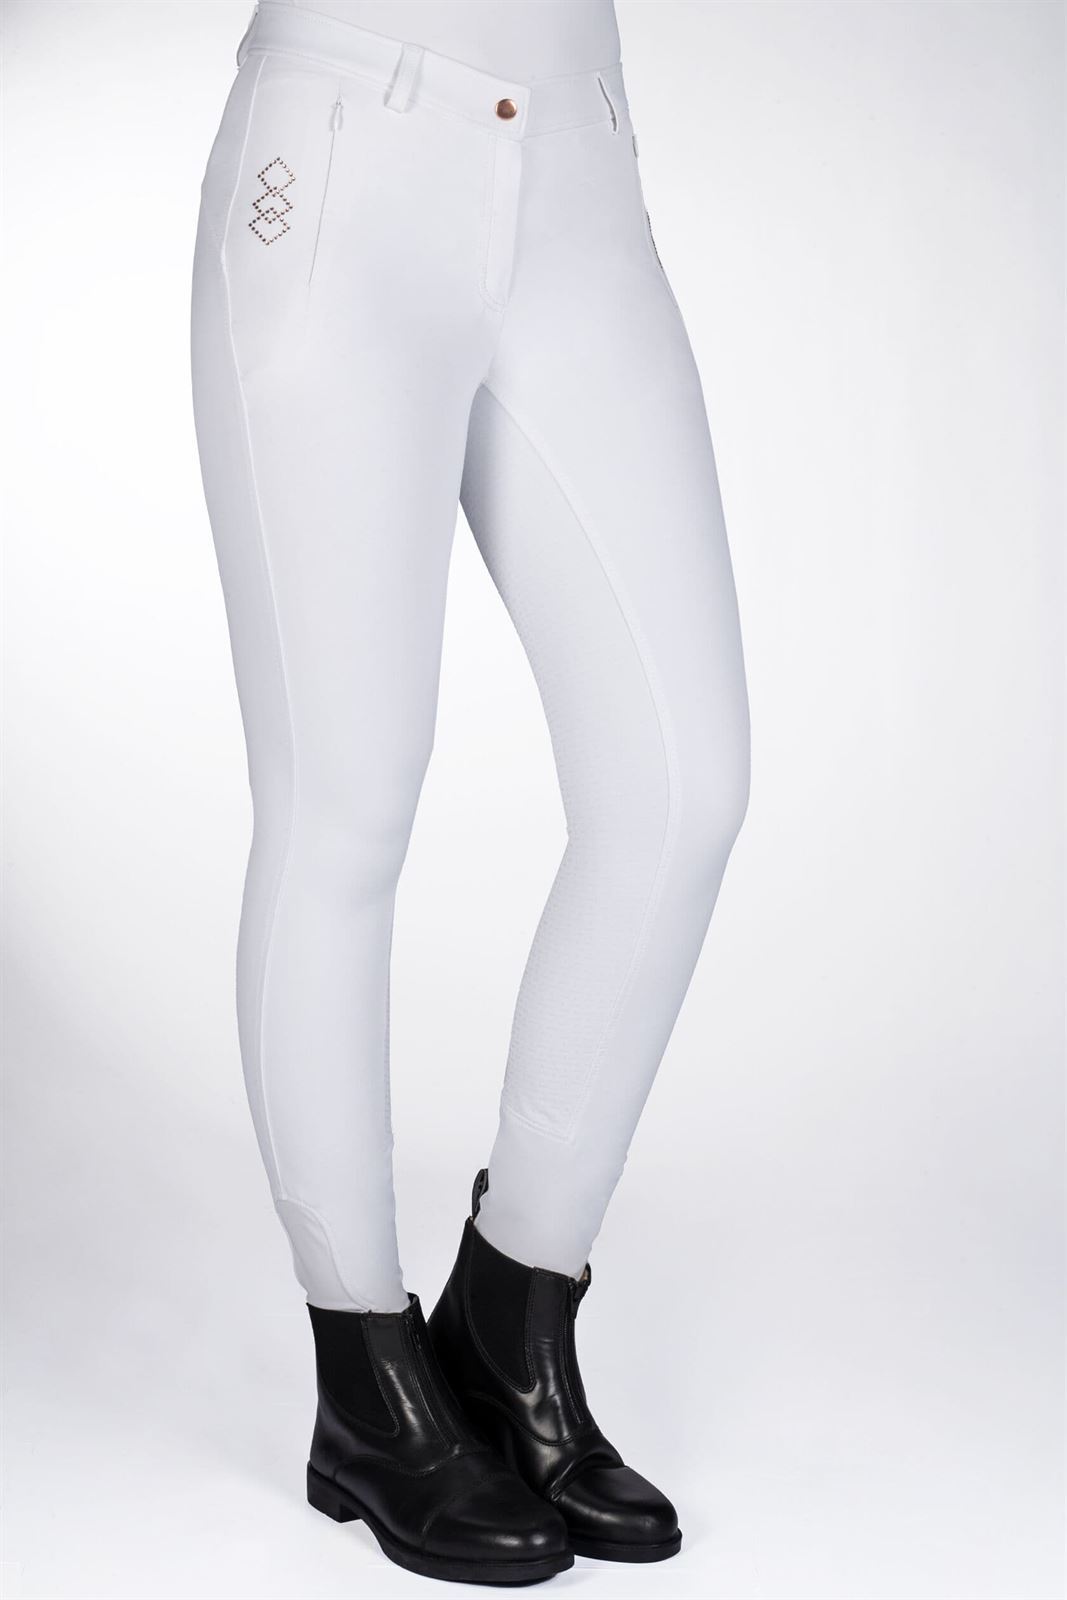 Pantalón mujer HKM Sports Equipment Alexis culera de grip, color blanco - Imagen 1